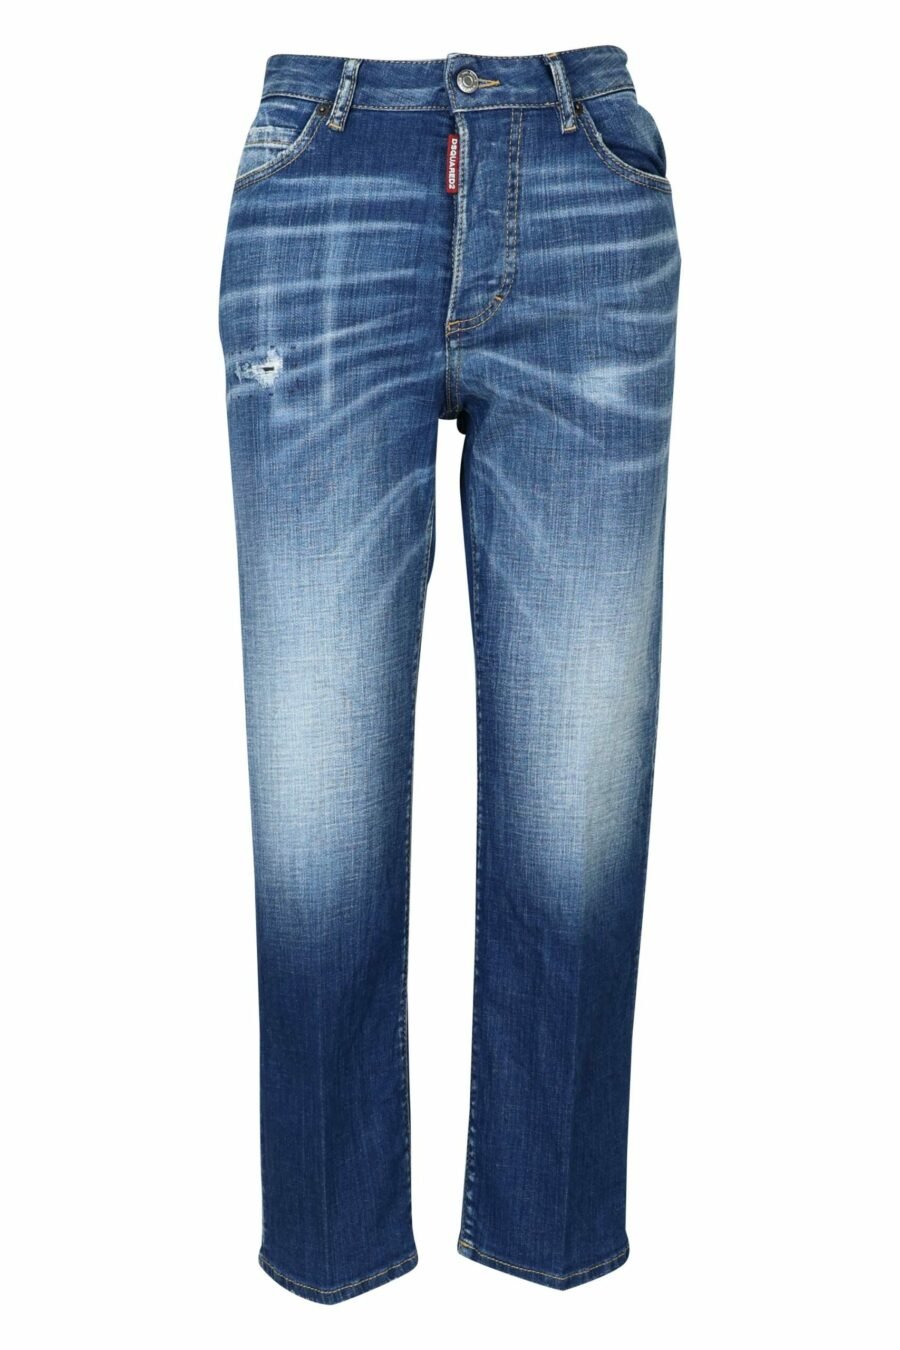 Blue "boston jean" worn trousers - 8054148460044 scaled